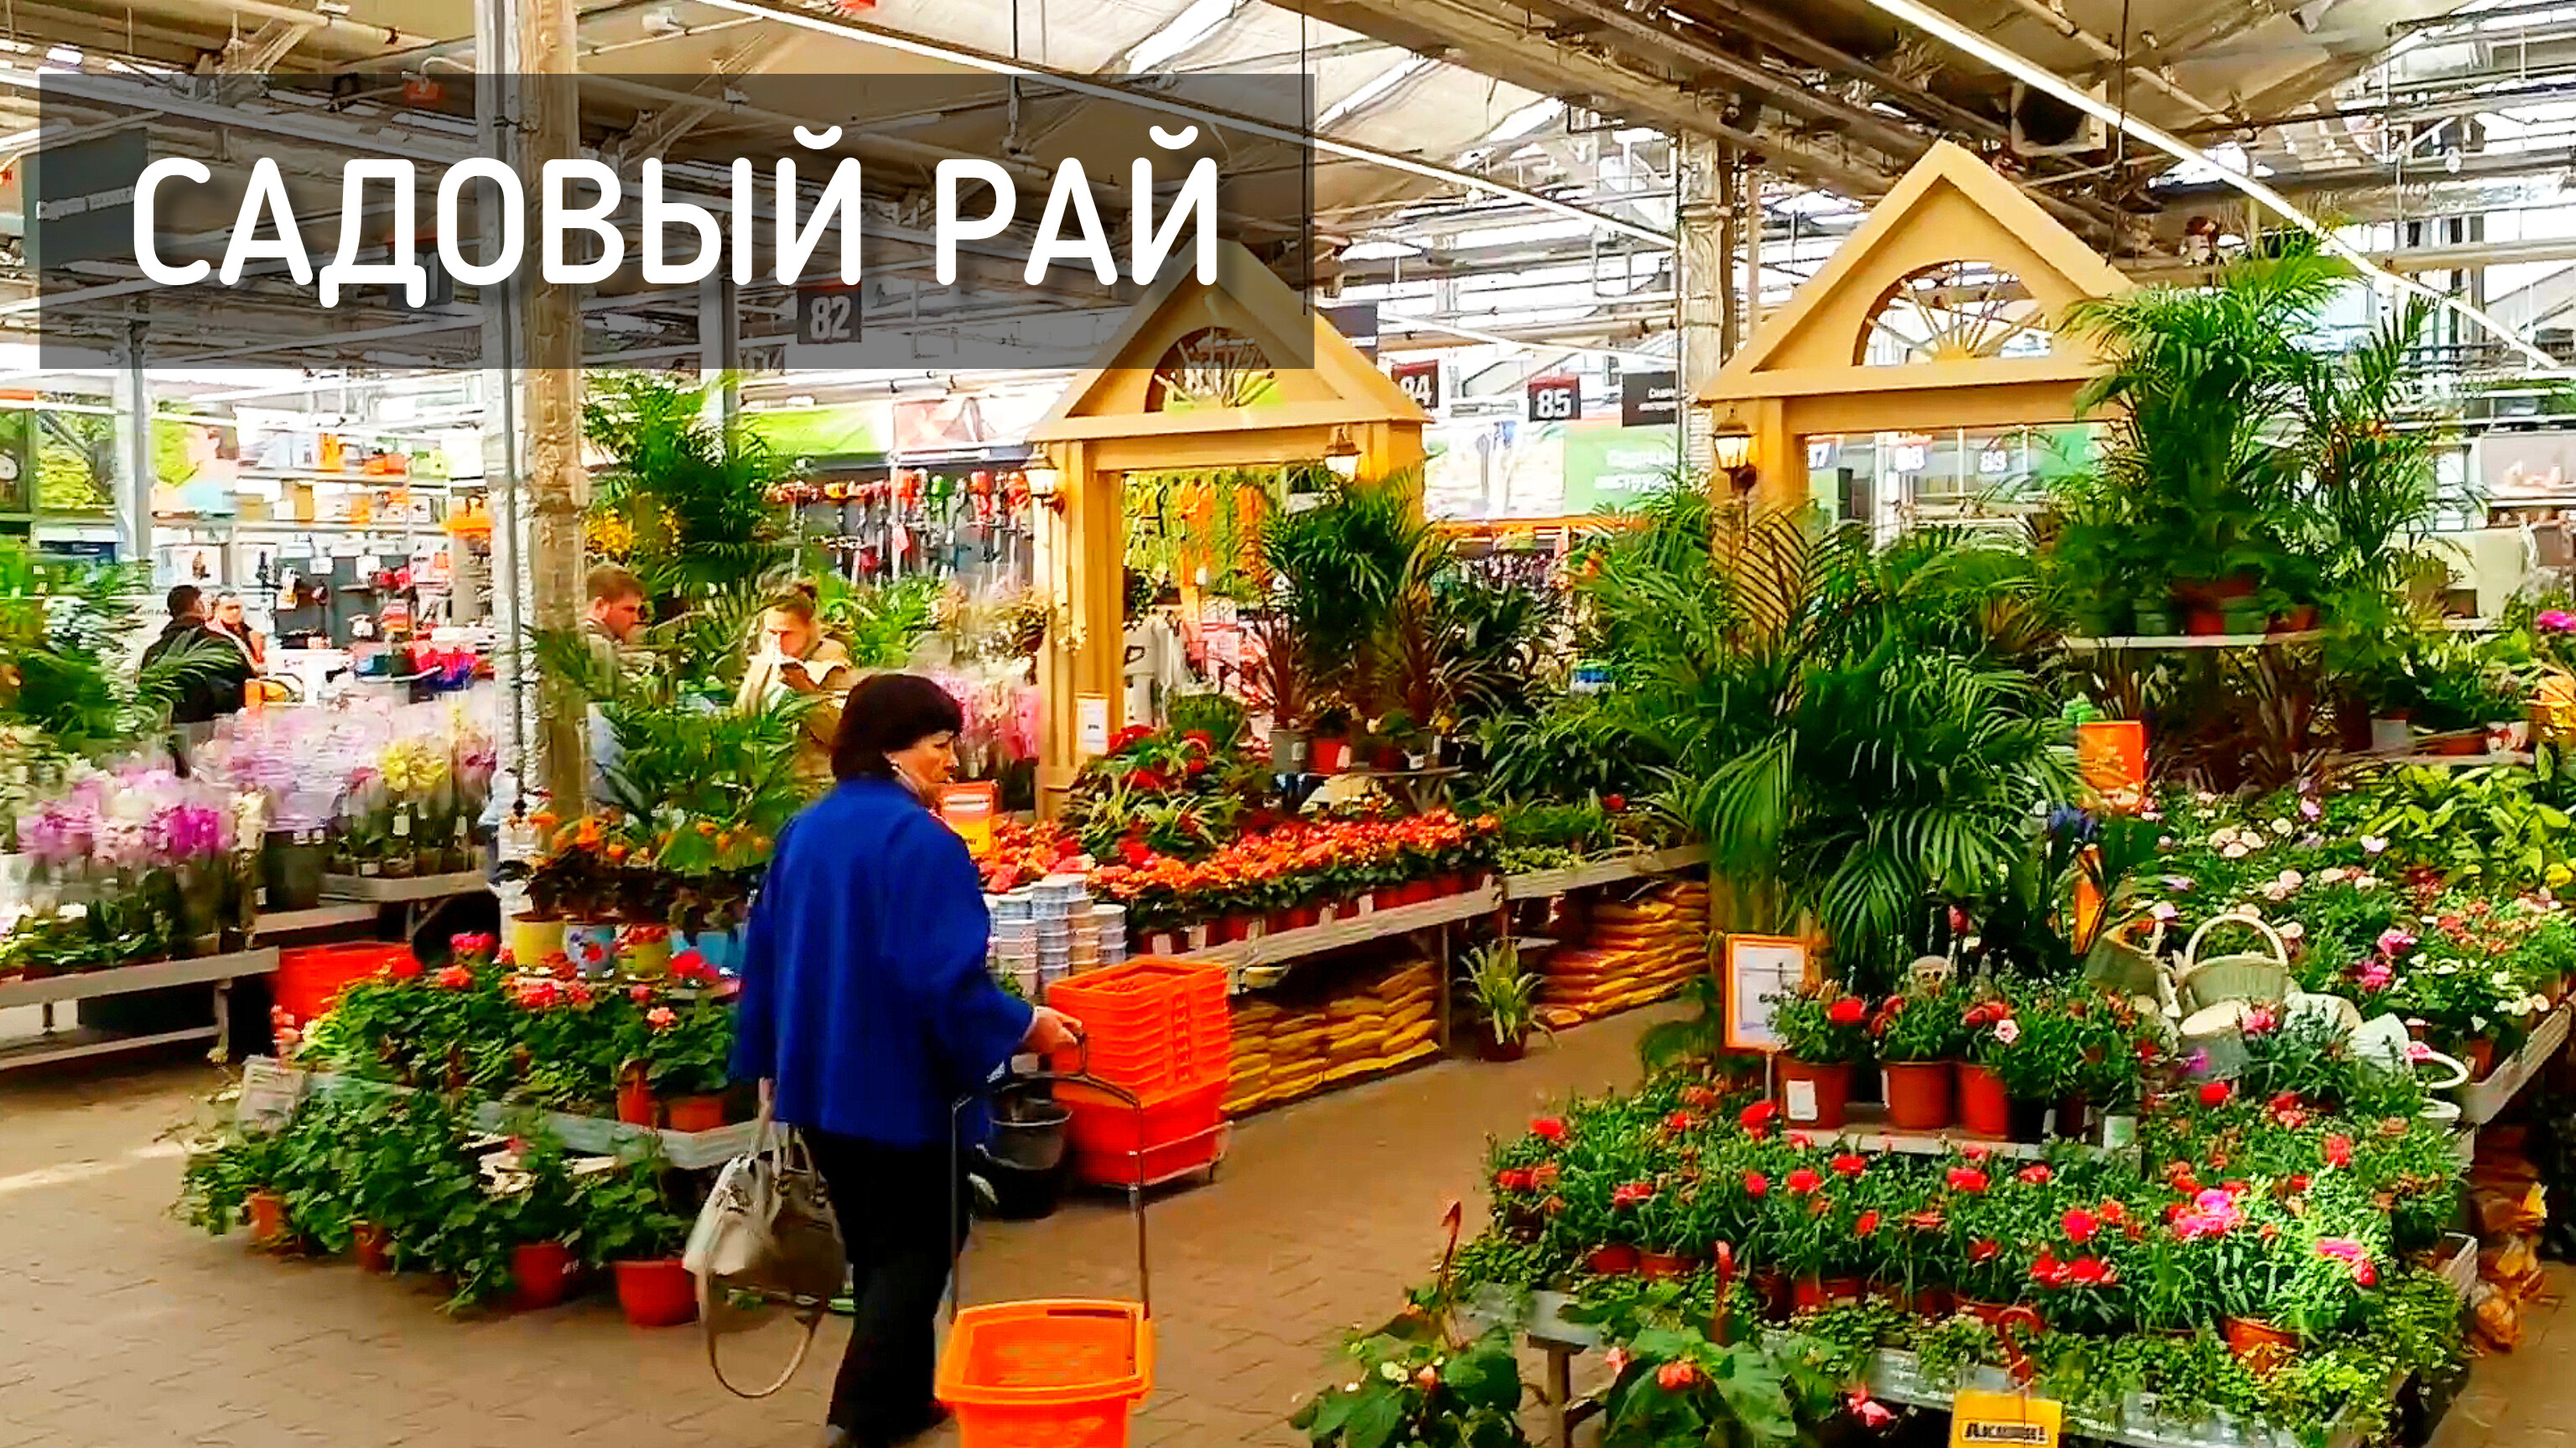 Садовый рай. Дачный сезон. OBI в Мега Белая Дача / Summer season. Garden paradise #москва #сад #дача